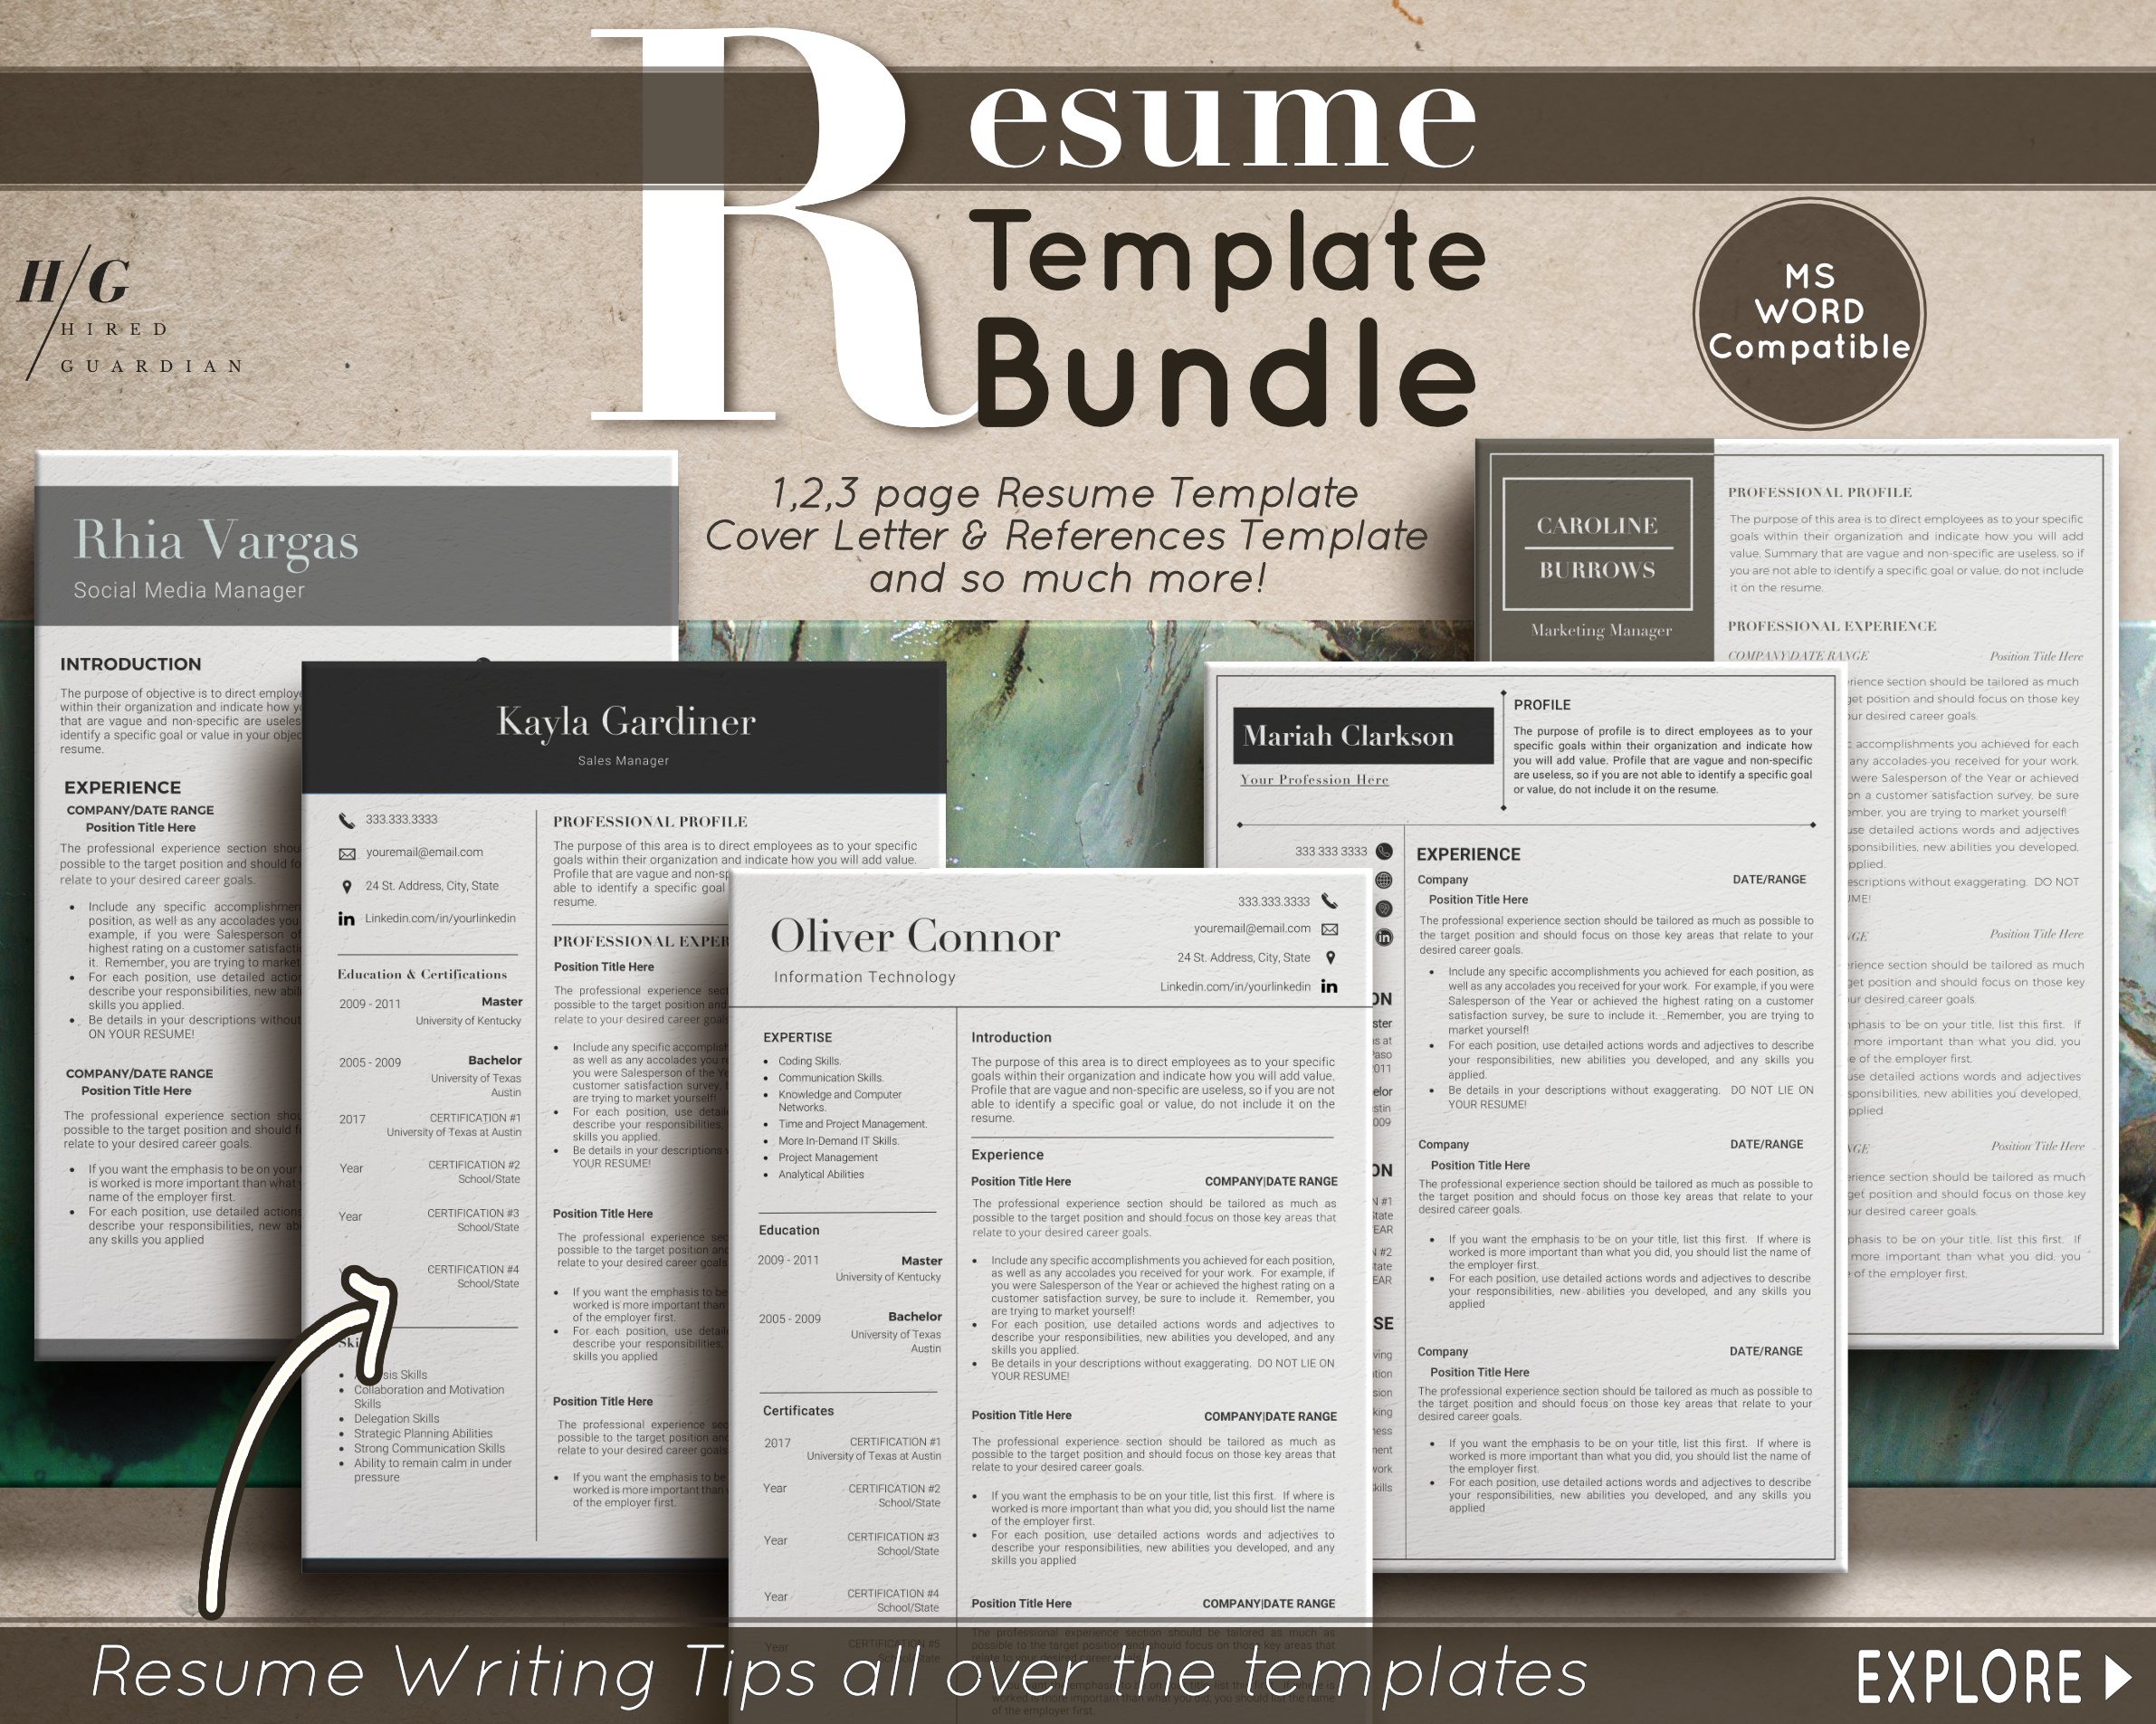 SALE! Resume Template Bundle cover image.